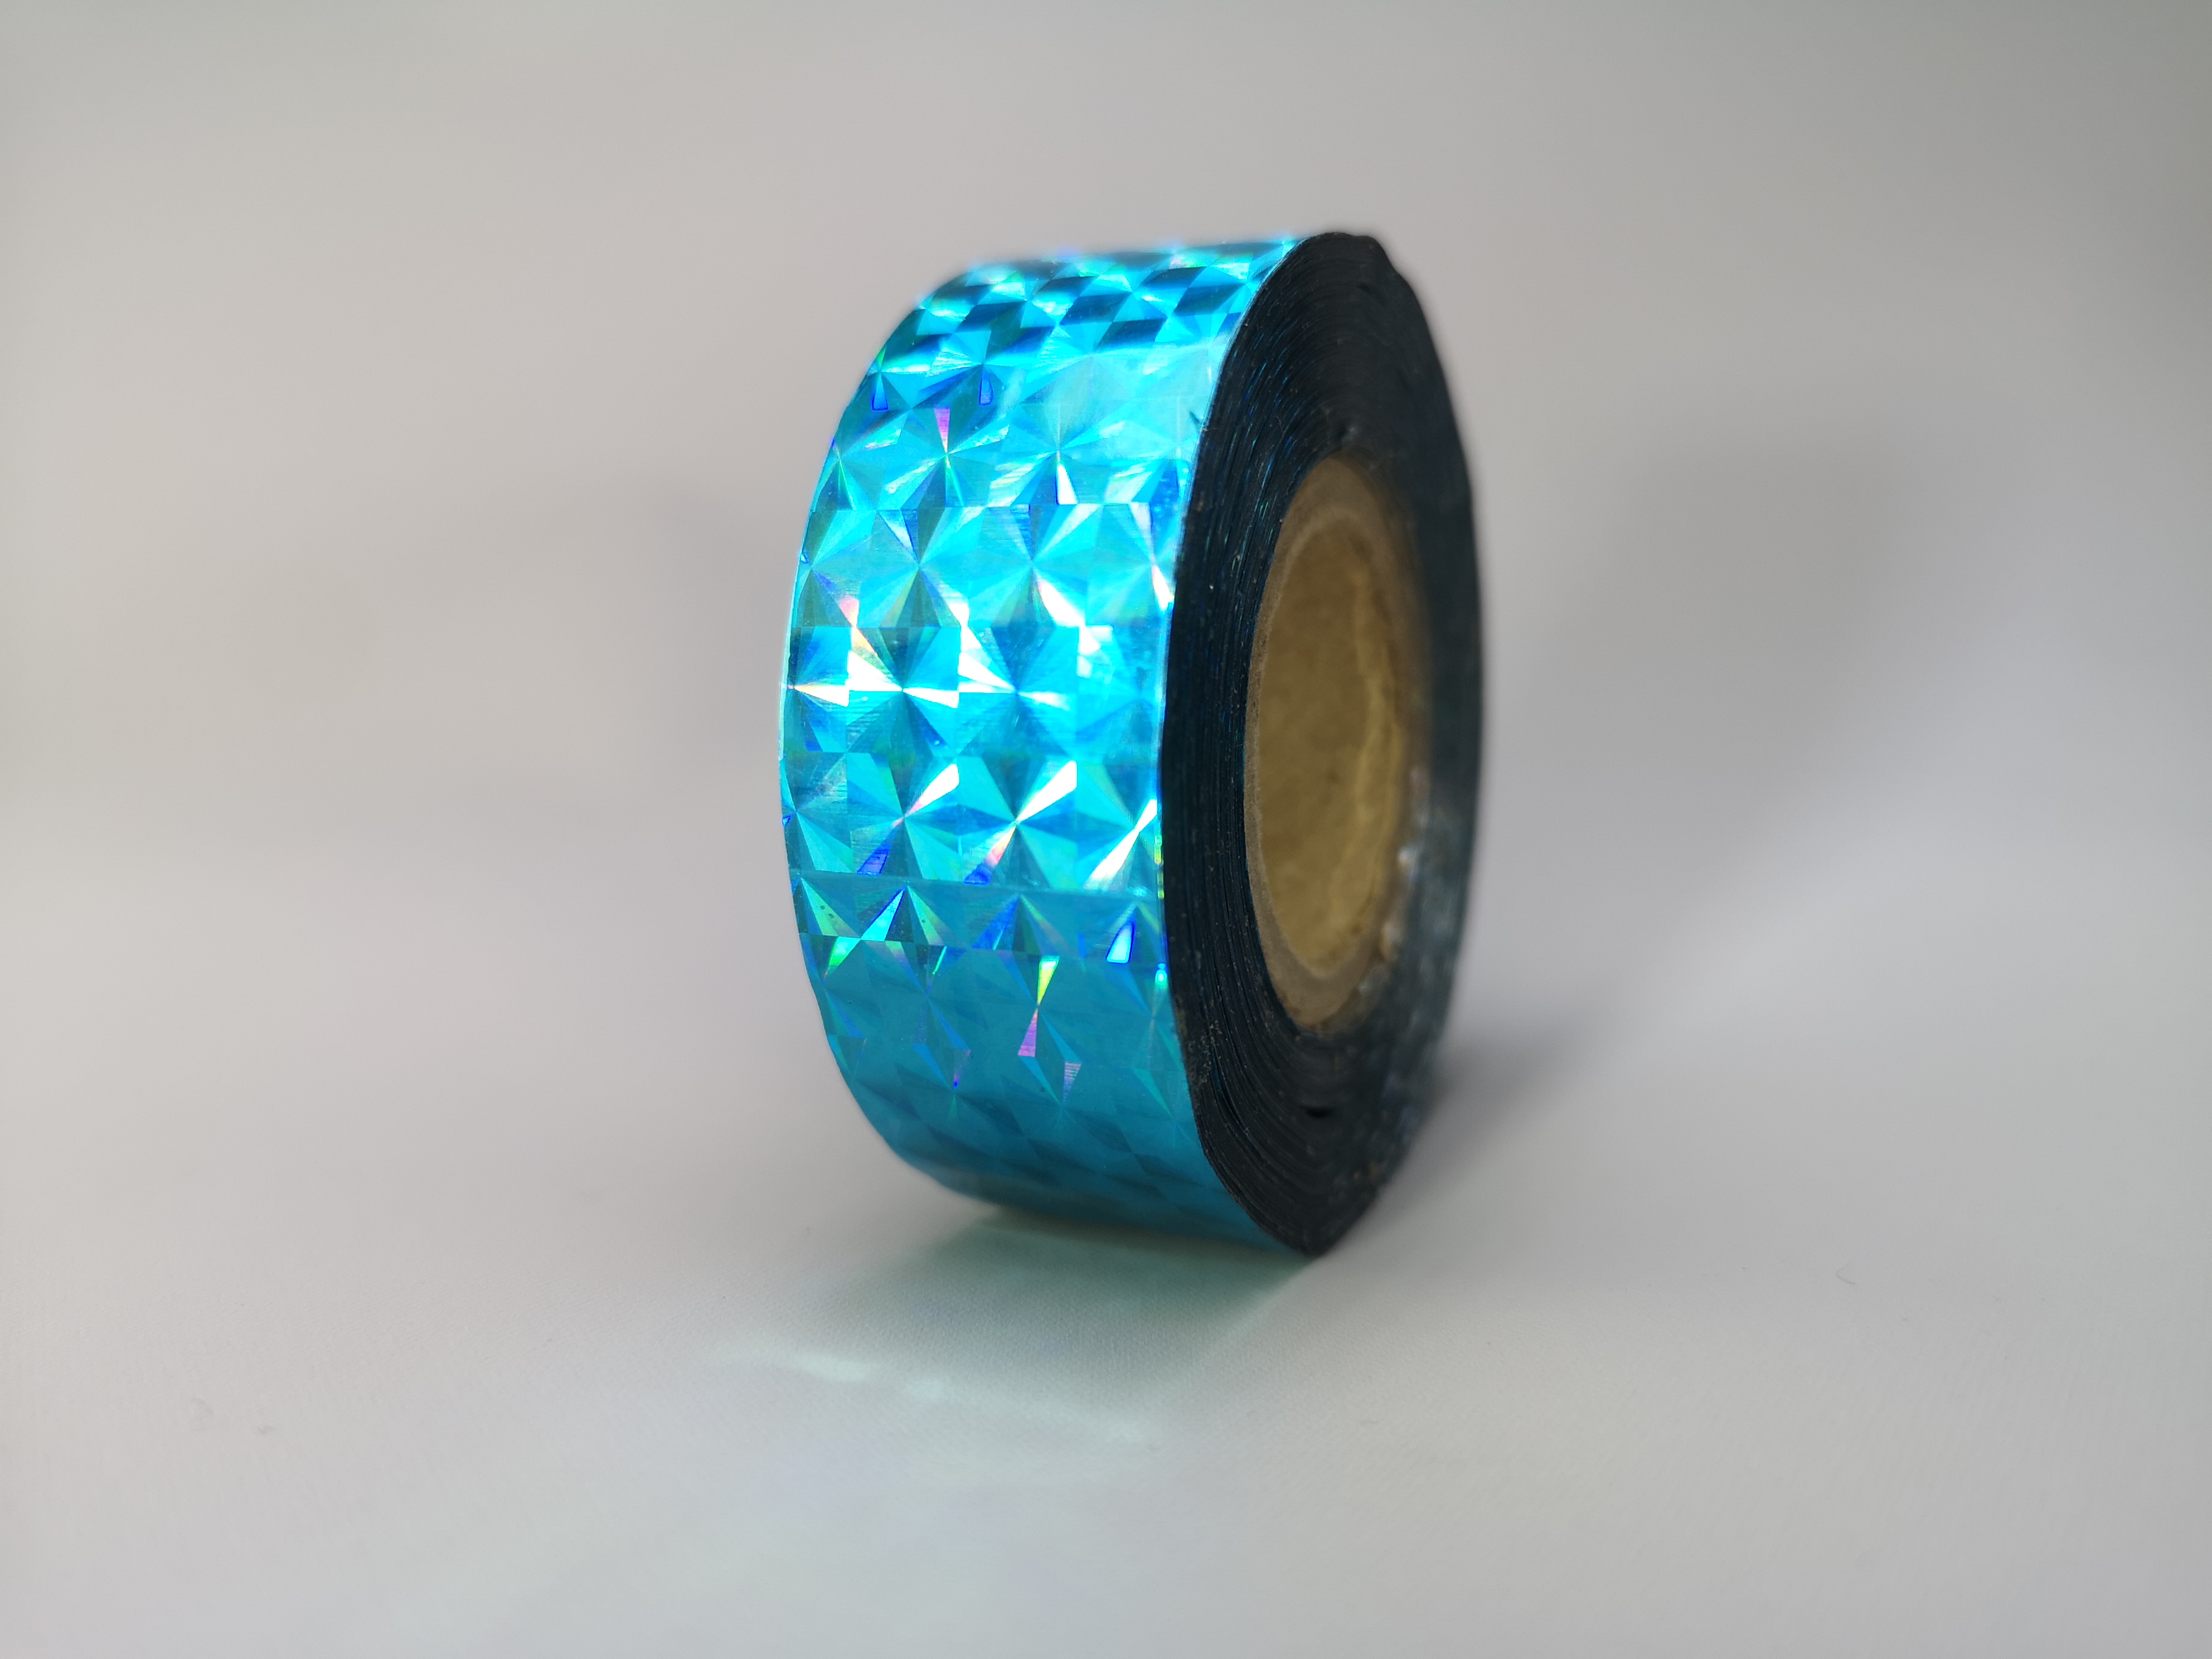 Holografic Prisma Teal 25m Deco-Tape